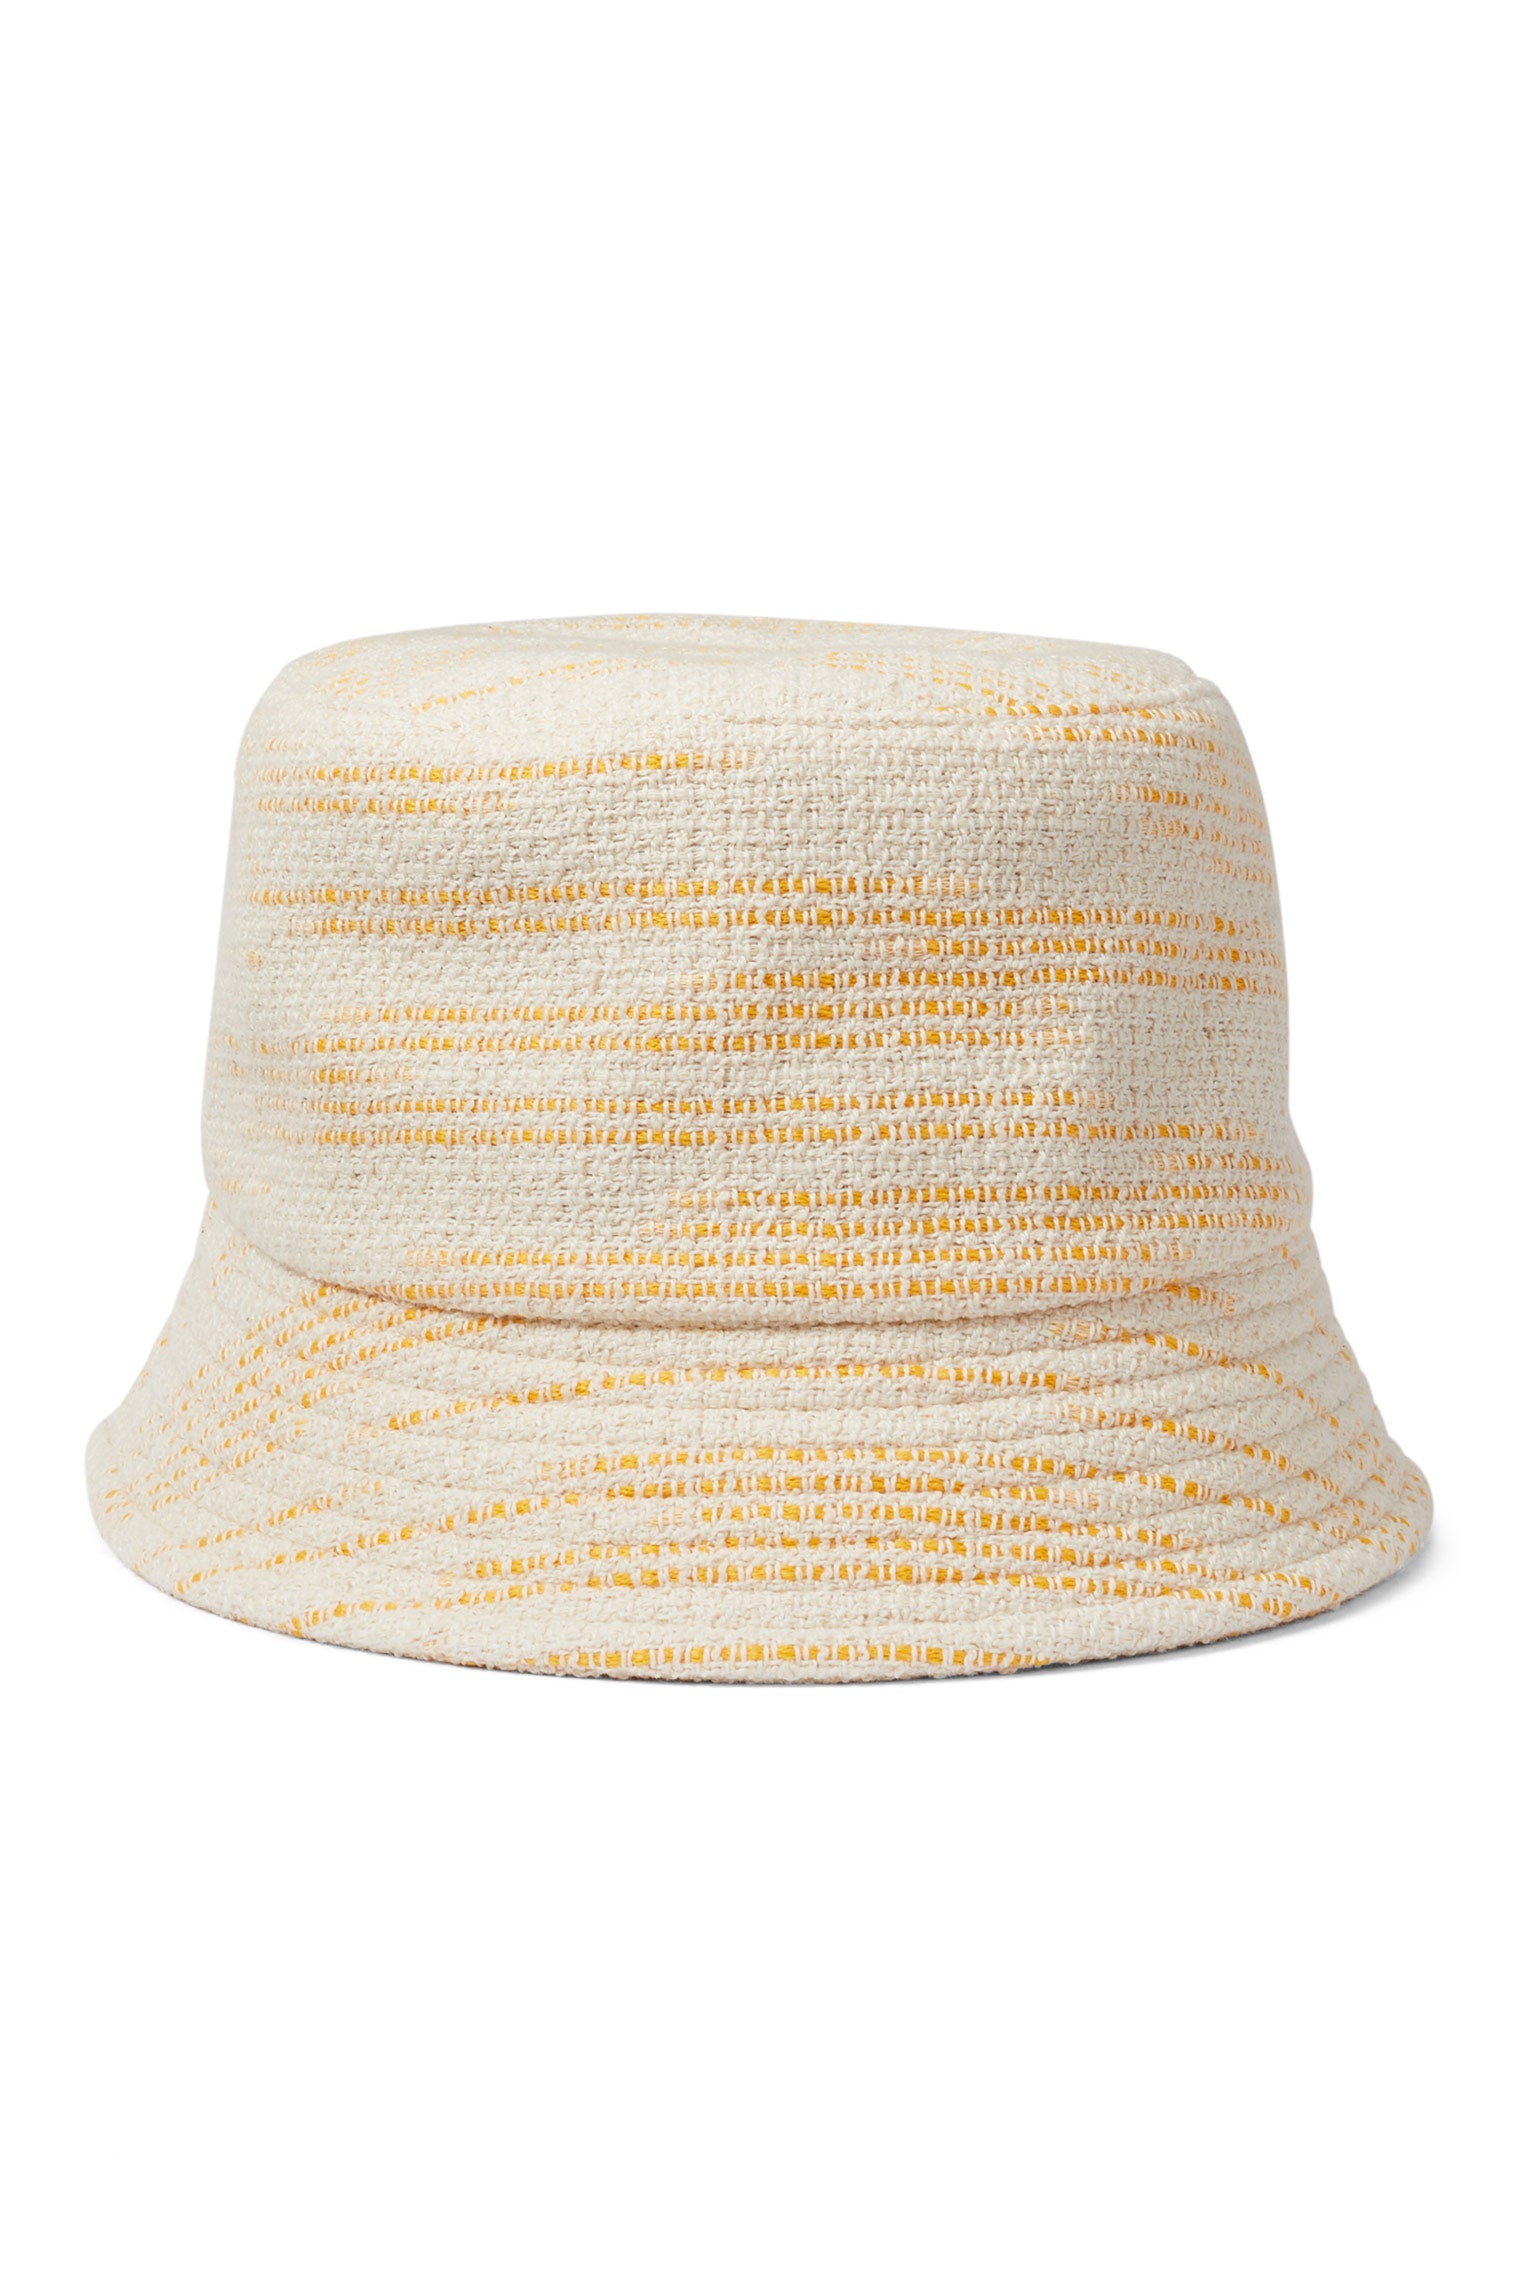 Rye Yellow Bucket Hat - Bucket Hats - Lock & Co. Hatters London UK